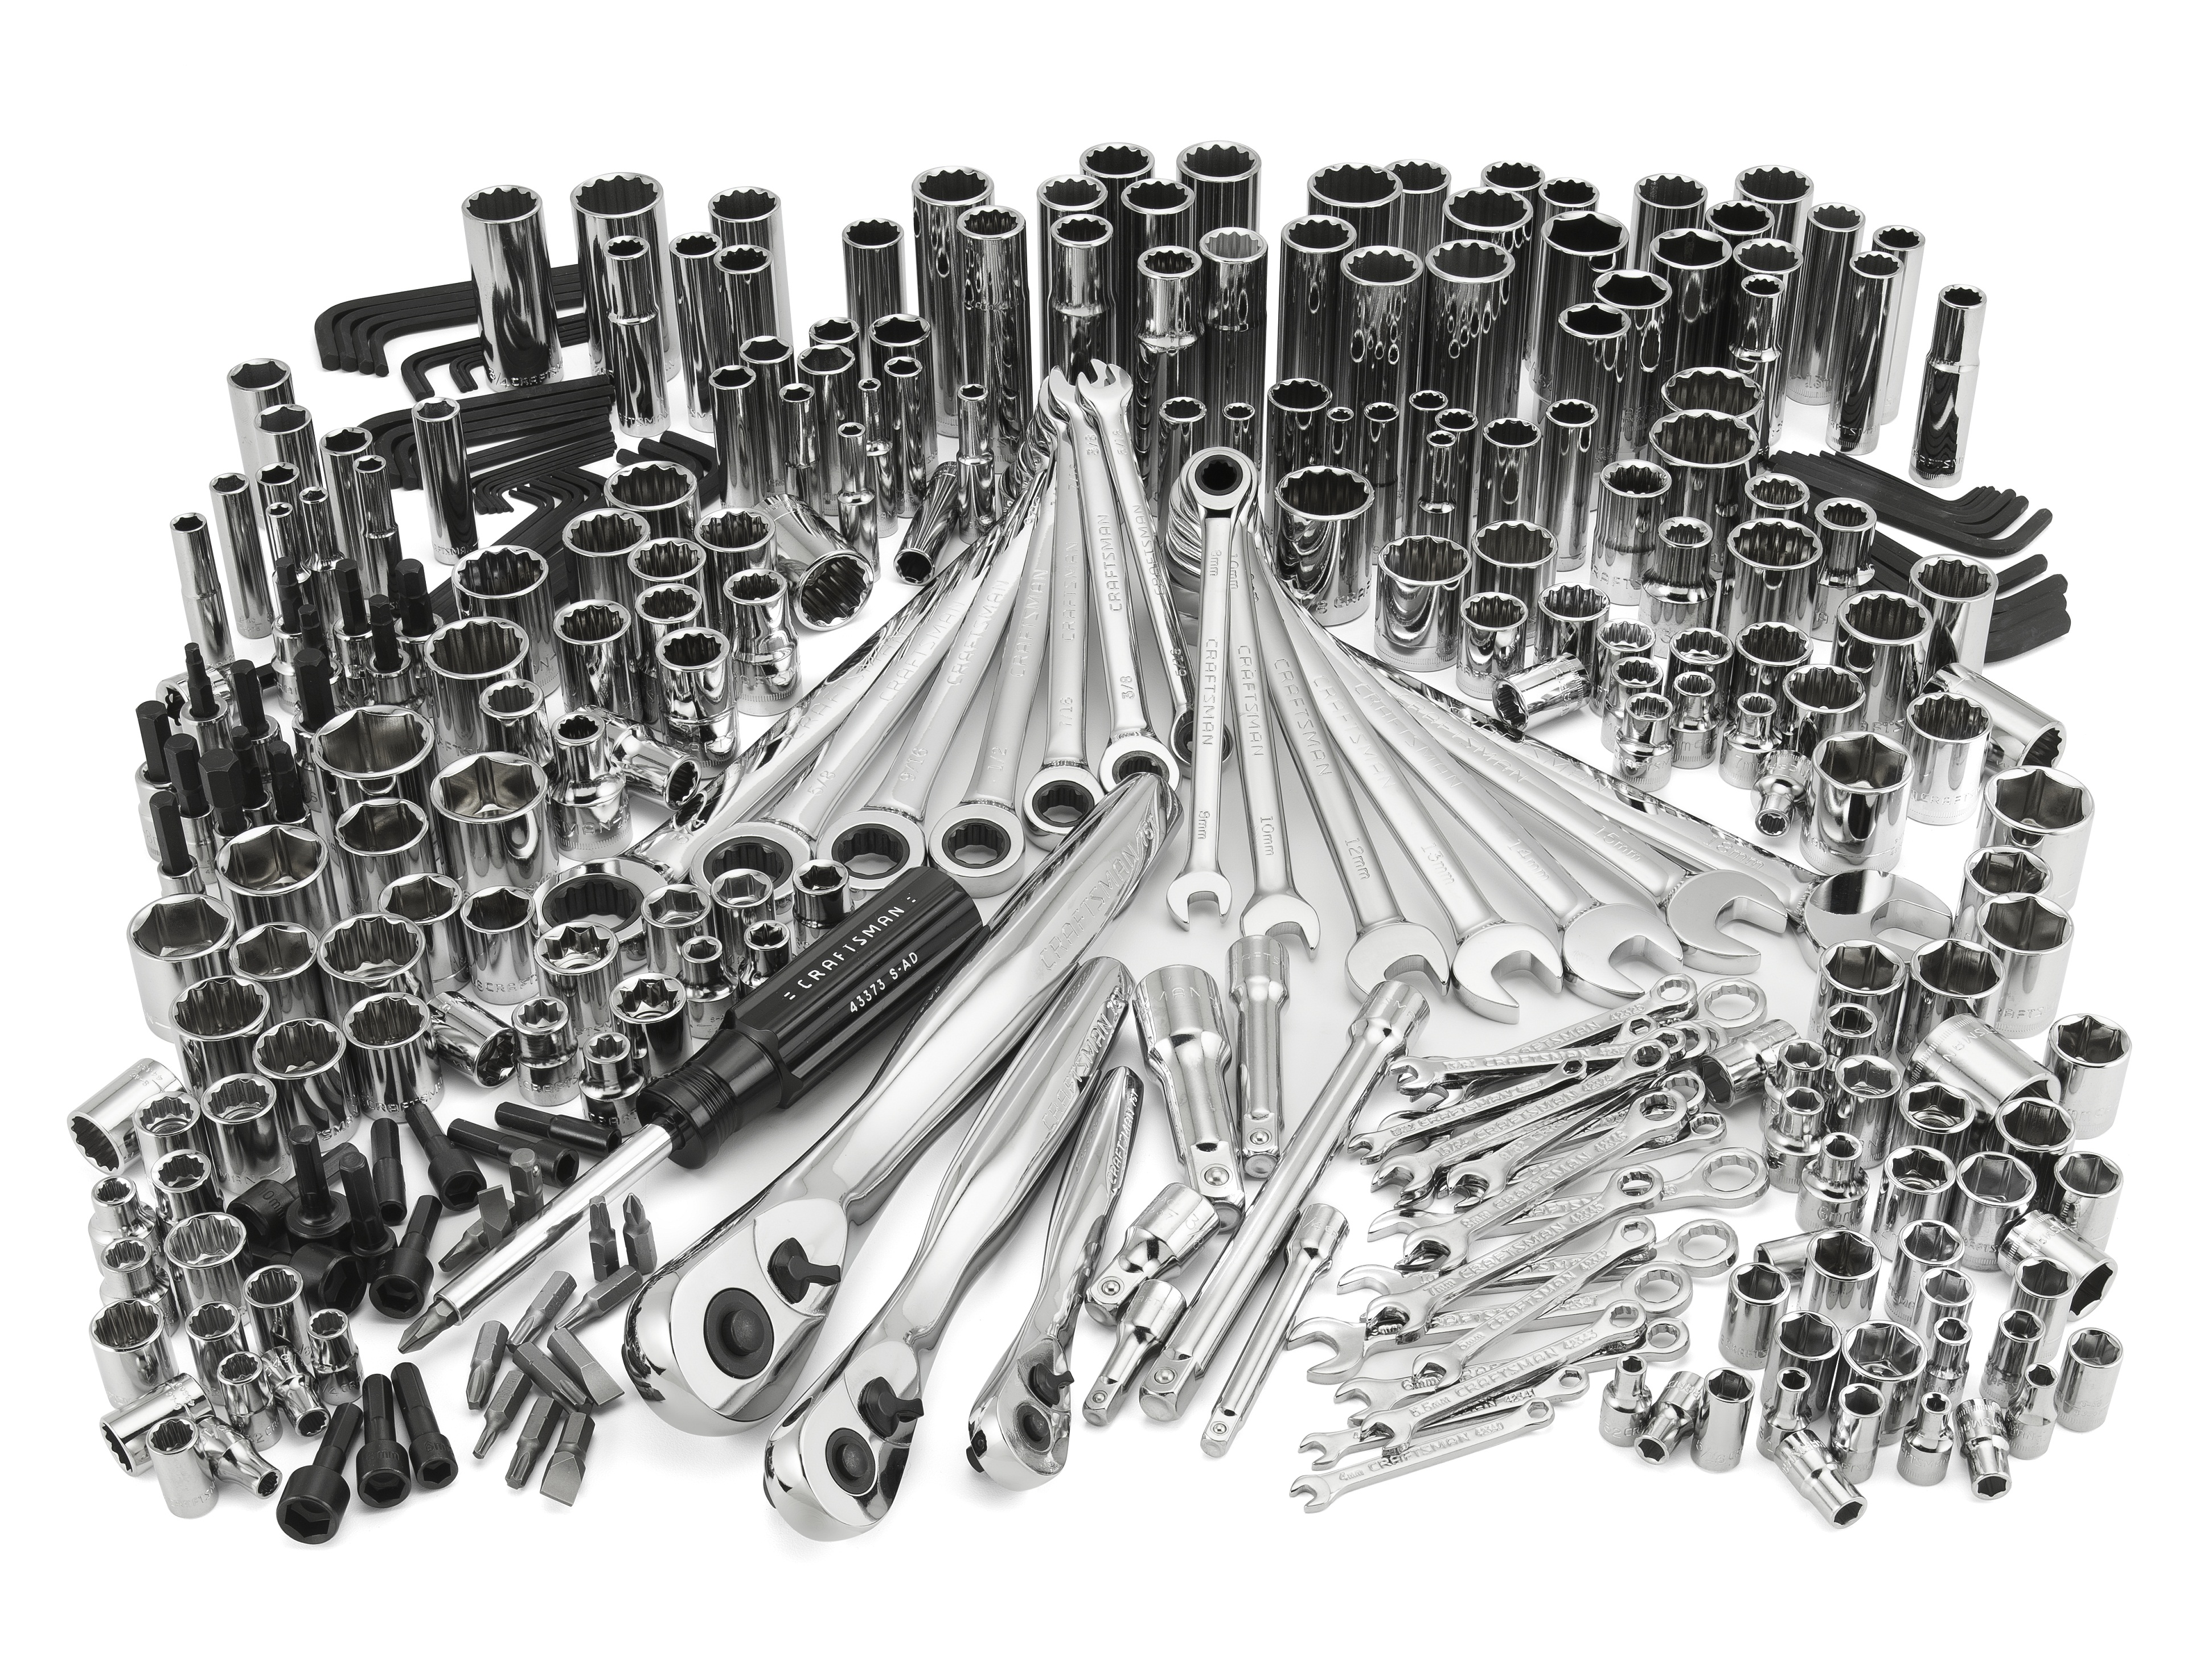 Craftsman Craftsman 311pc. Mechanics Tool Set with 75-Tooth Ratchets